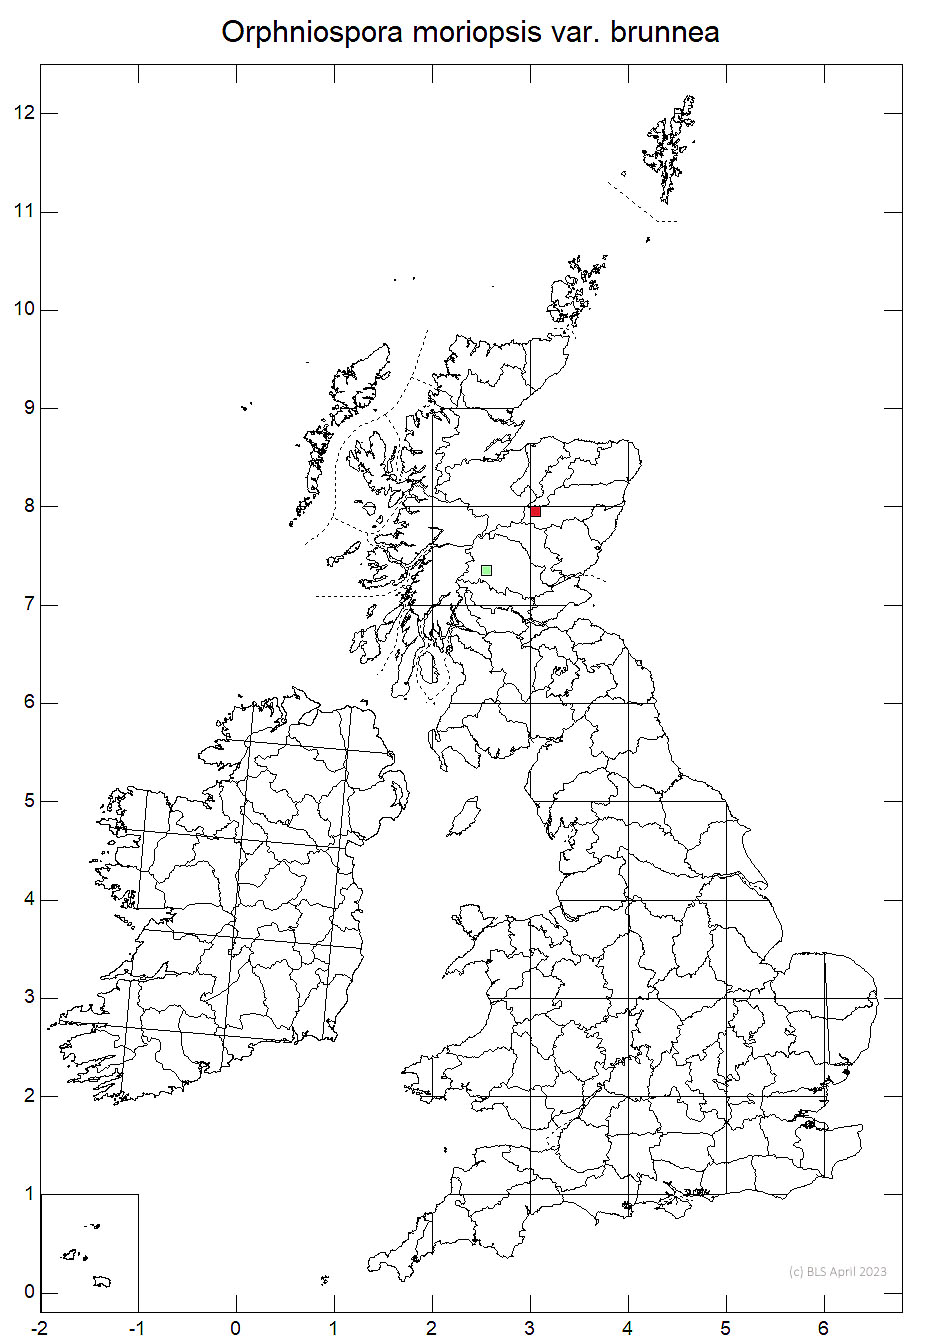 Orphniospora moriopsis var. brunnea 10km sq distribution map